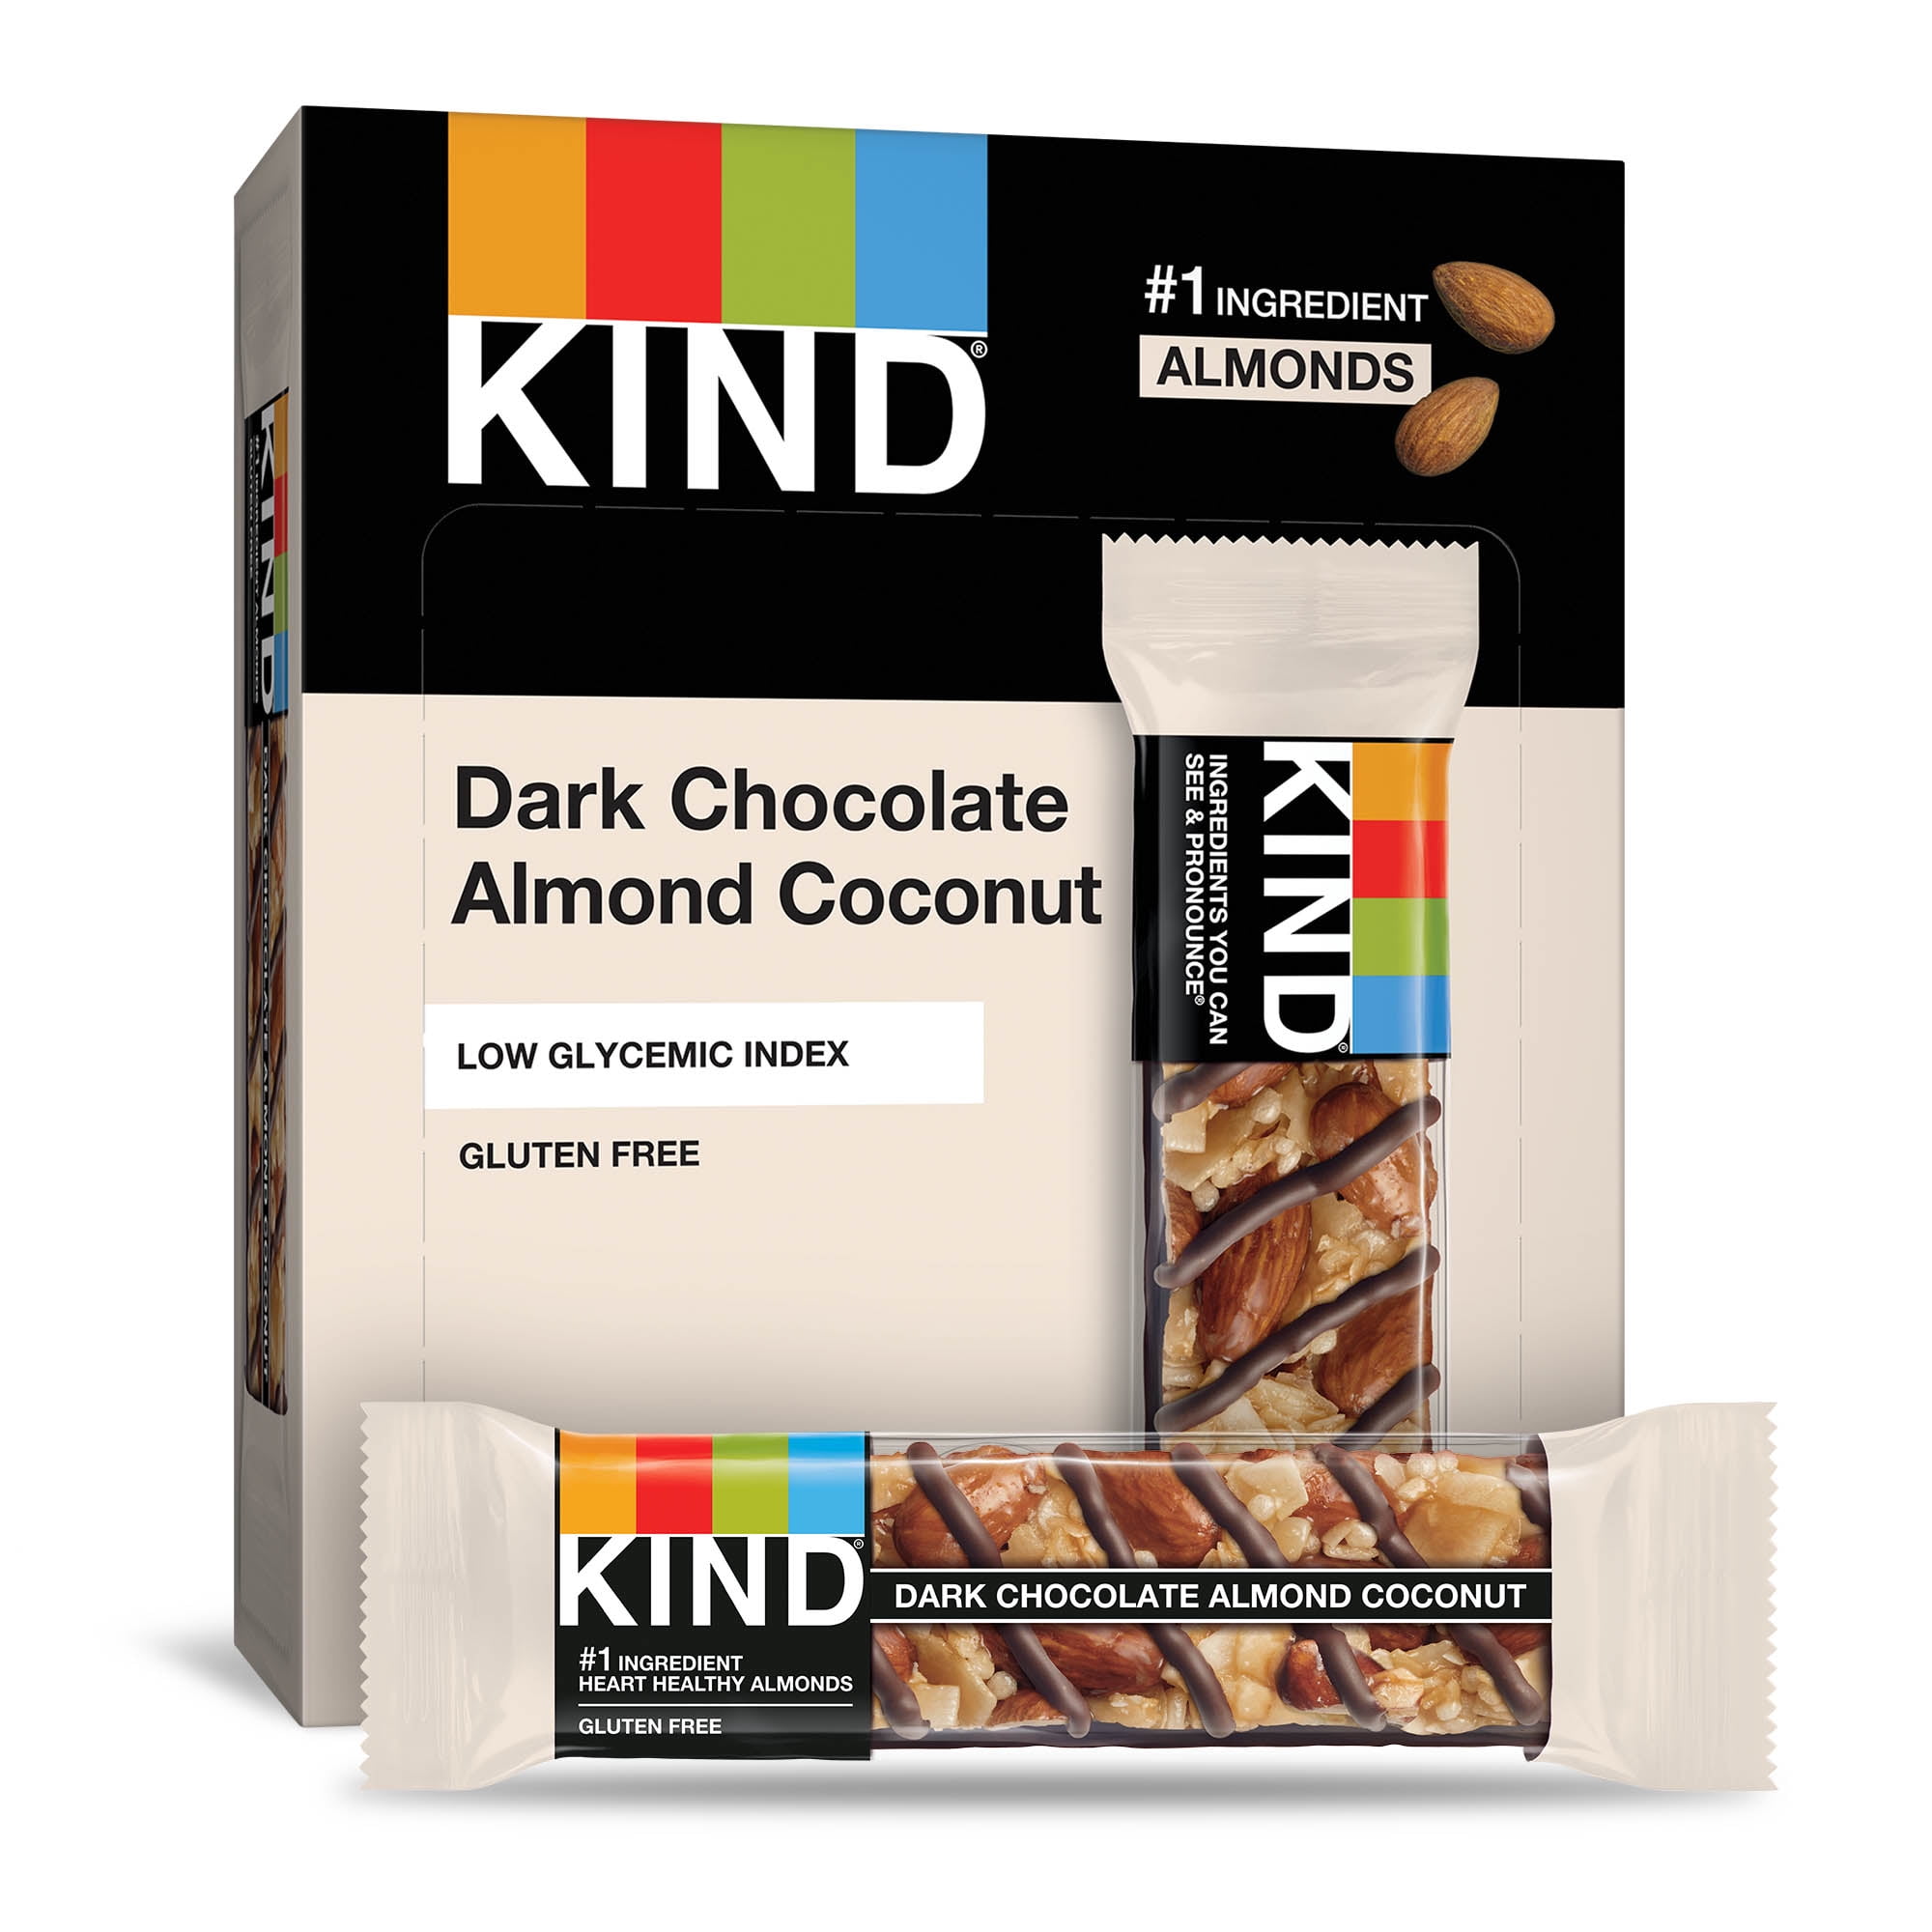 19987 Dark Chocolate Almond Coconut, Gluten Free, 1.4 Ounce Bars